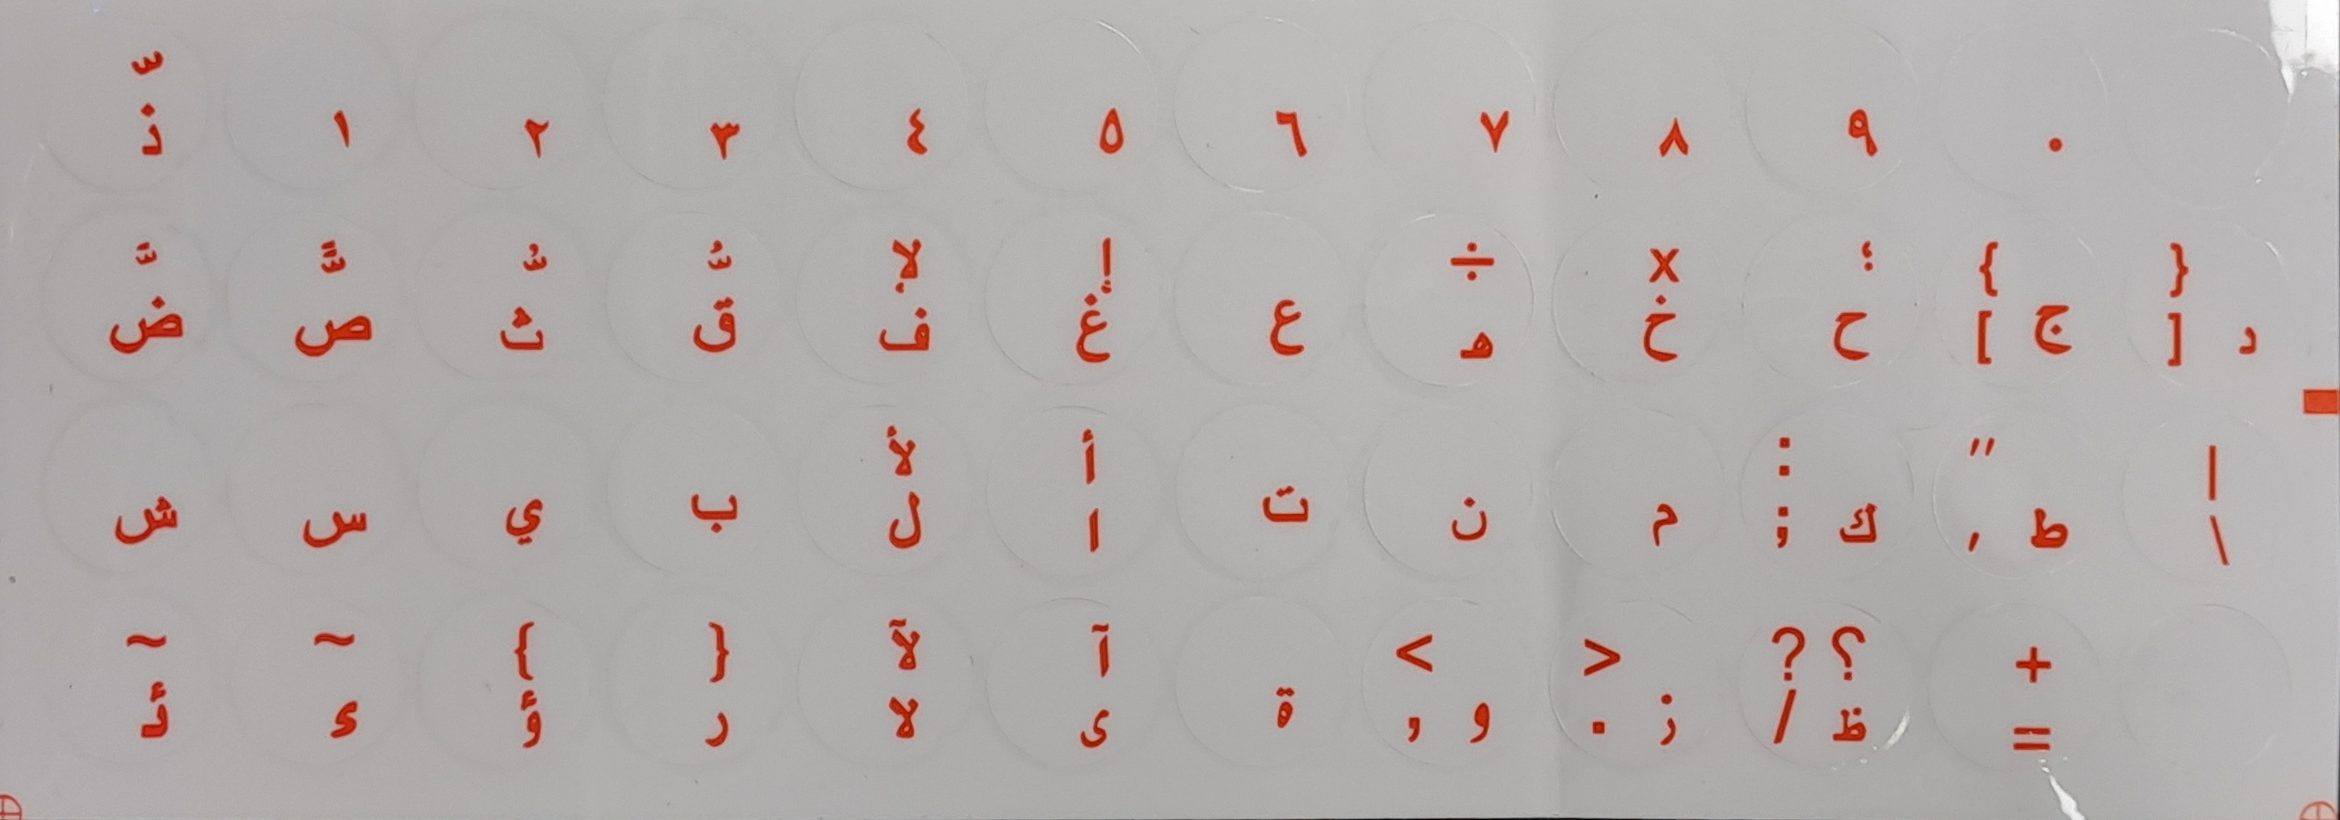 Arabic transparent keyboard sticker ( red color ) - Amman Jordan - Pccircle 